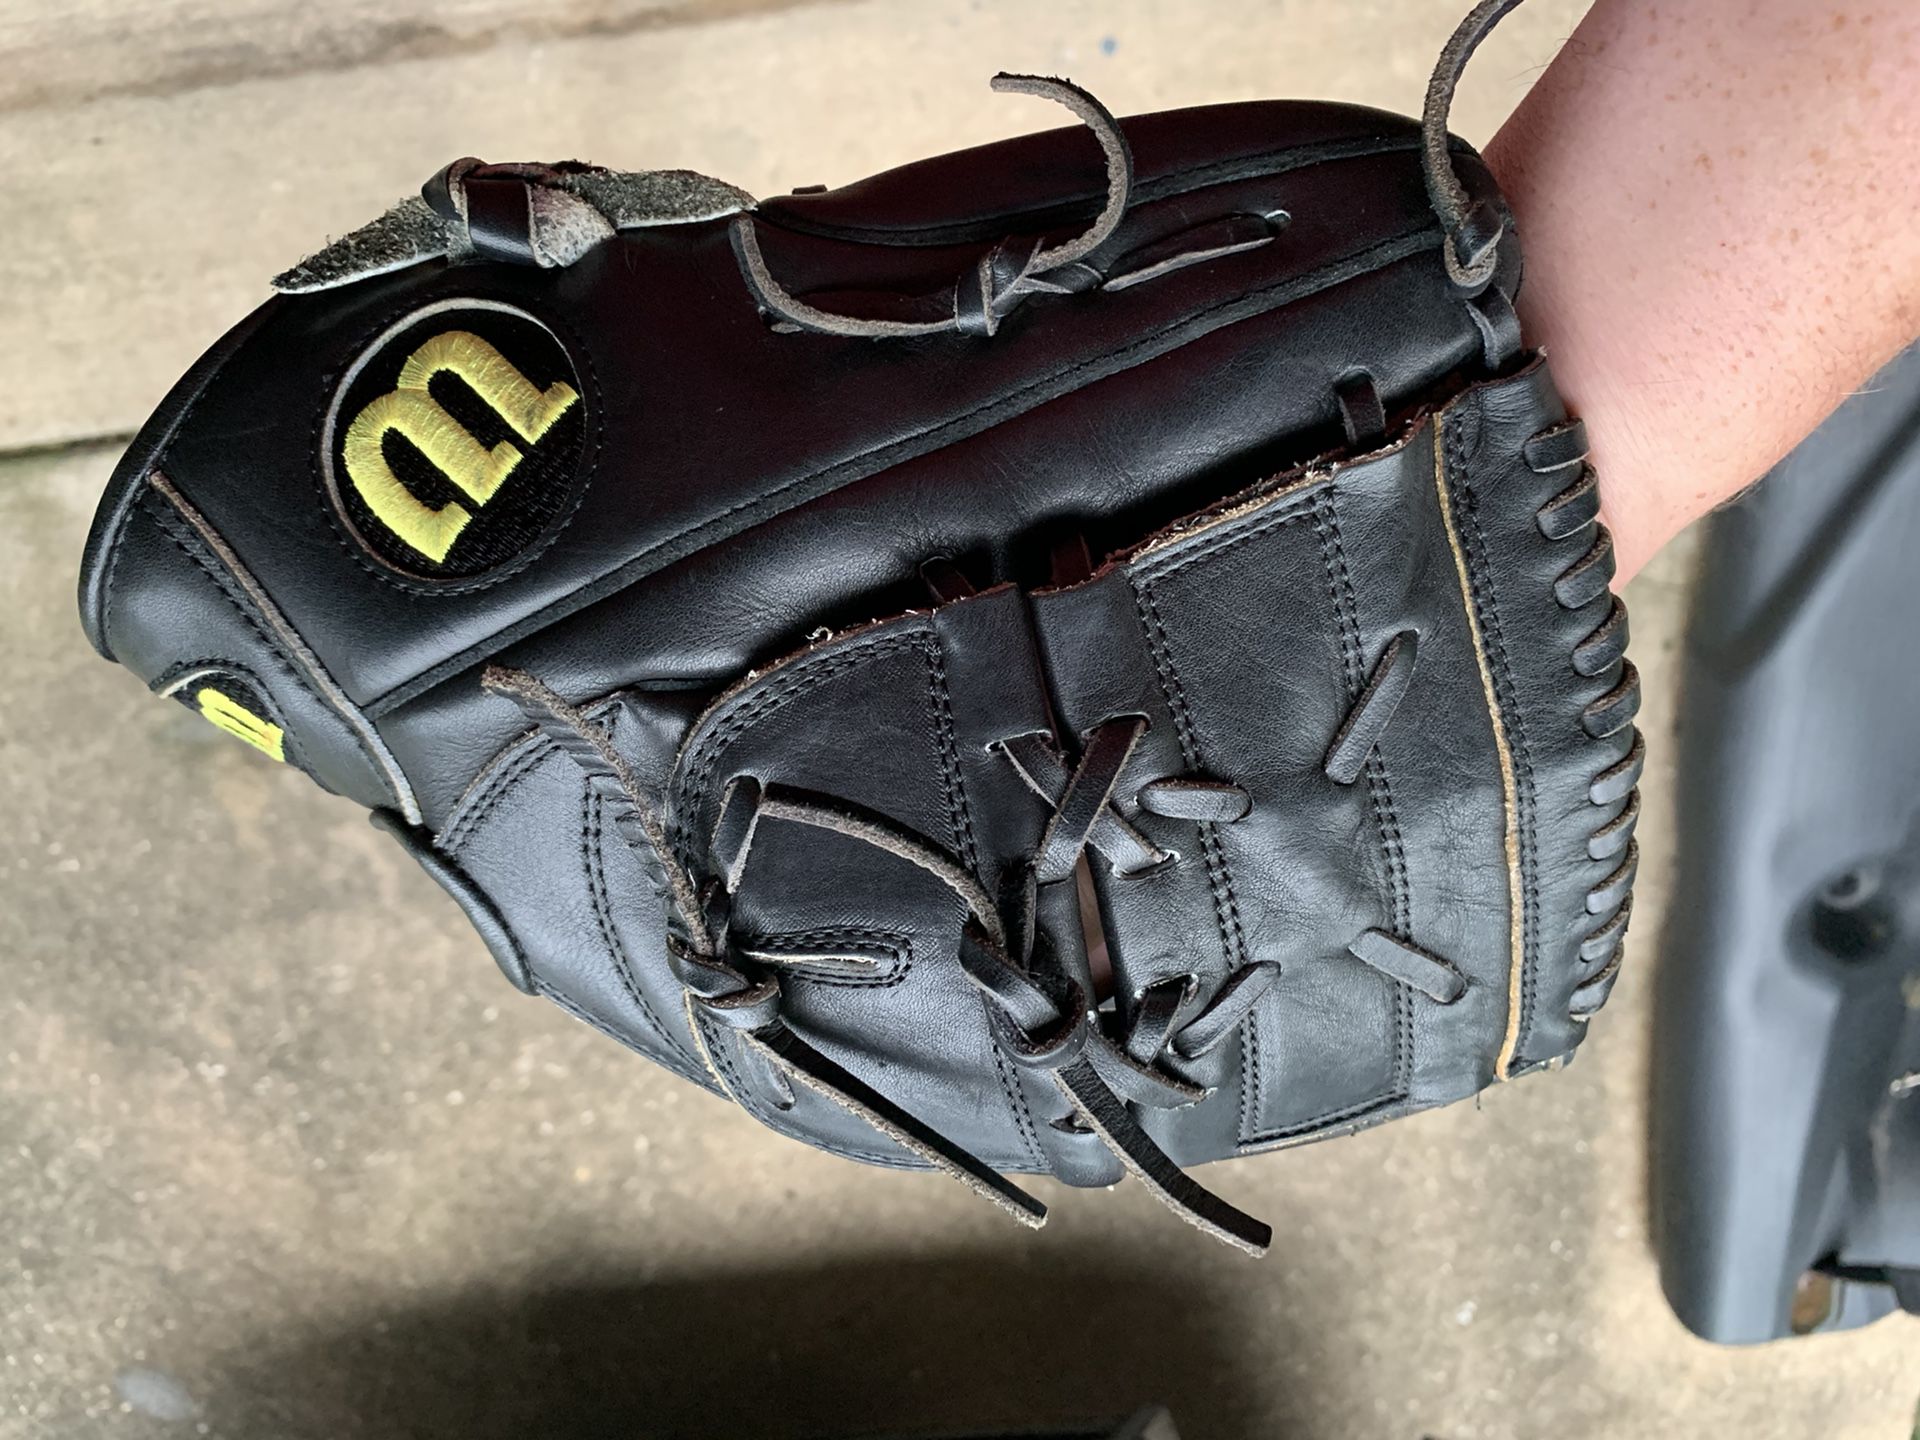 A2000 Clayton Kershaw LHT baseball glove